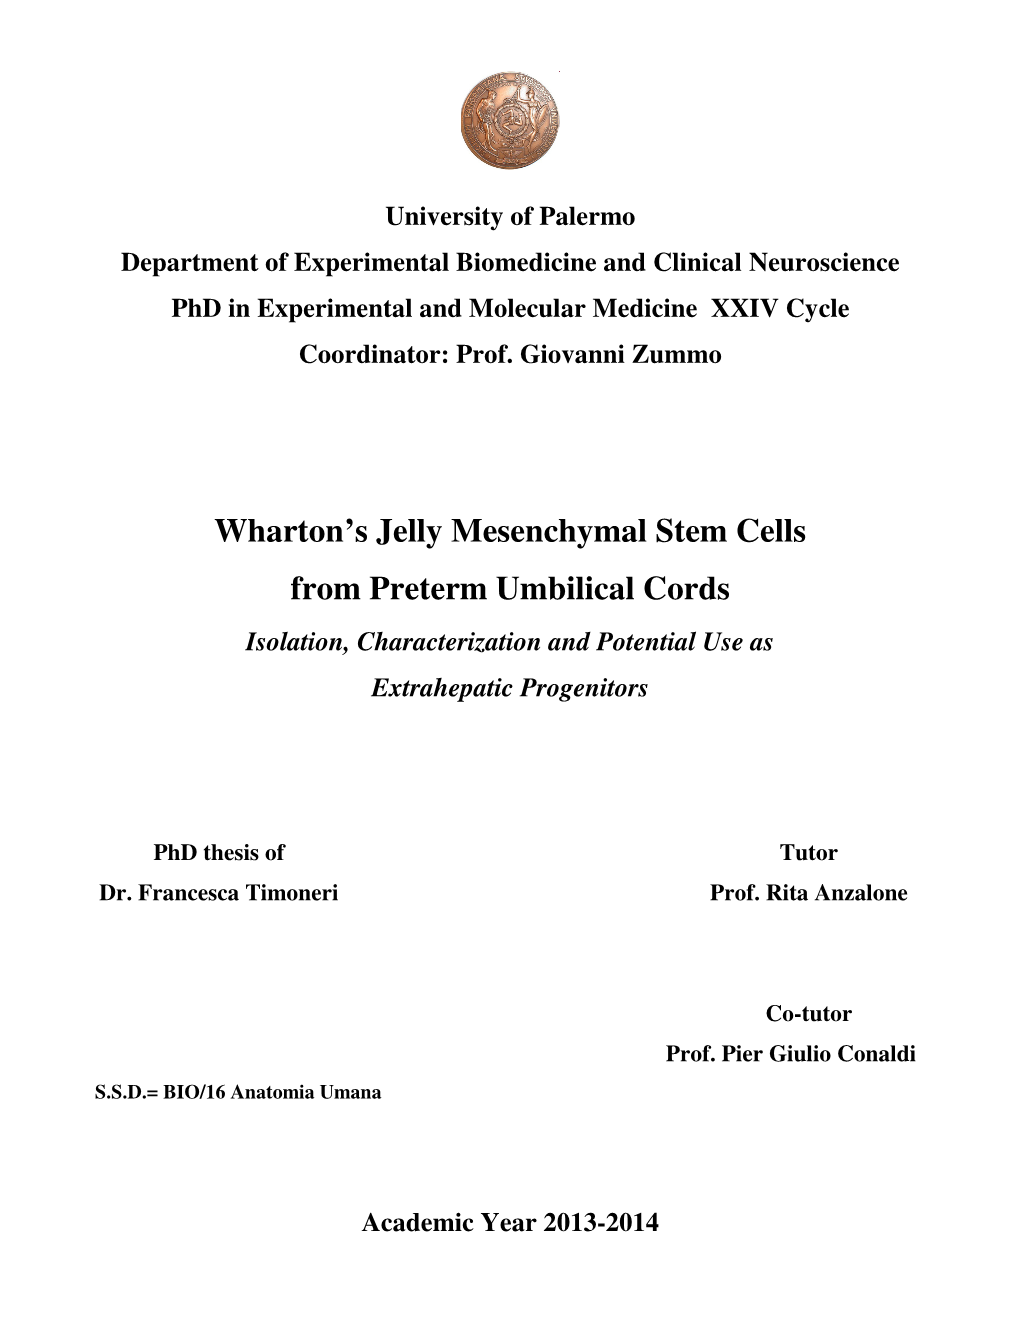 Wharton's Jelly Mesenchymal Stem Cells from Preterm Umbilical Cords